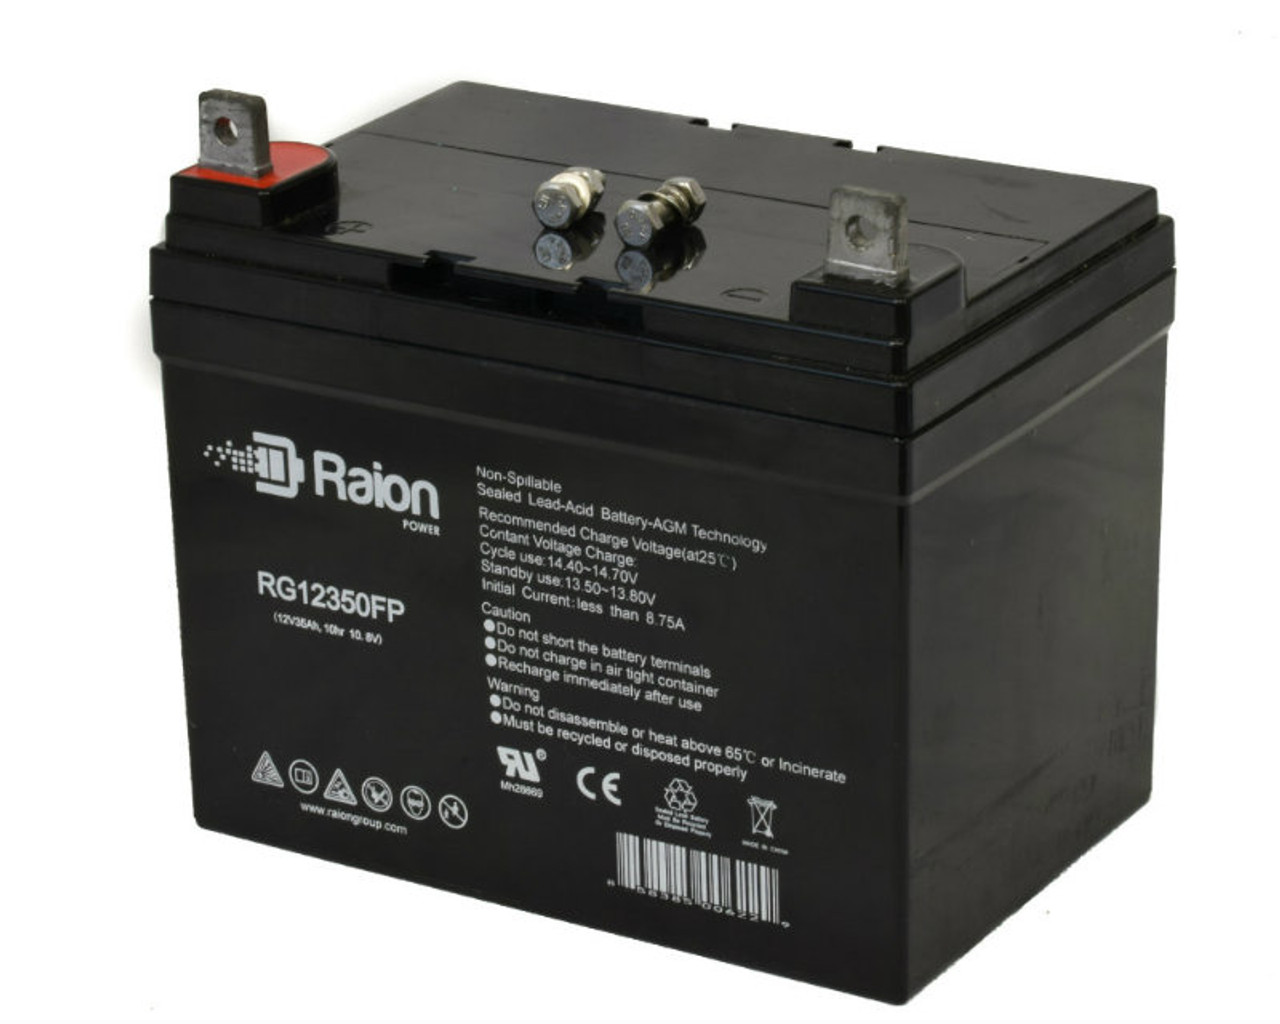 Raion Power Replacement 12V 35Ah RG12350FP Battery for John Deere 108